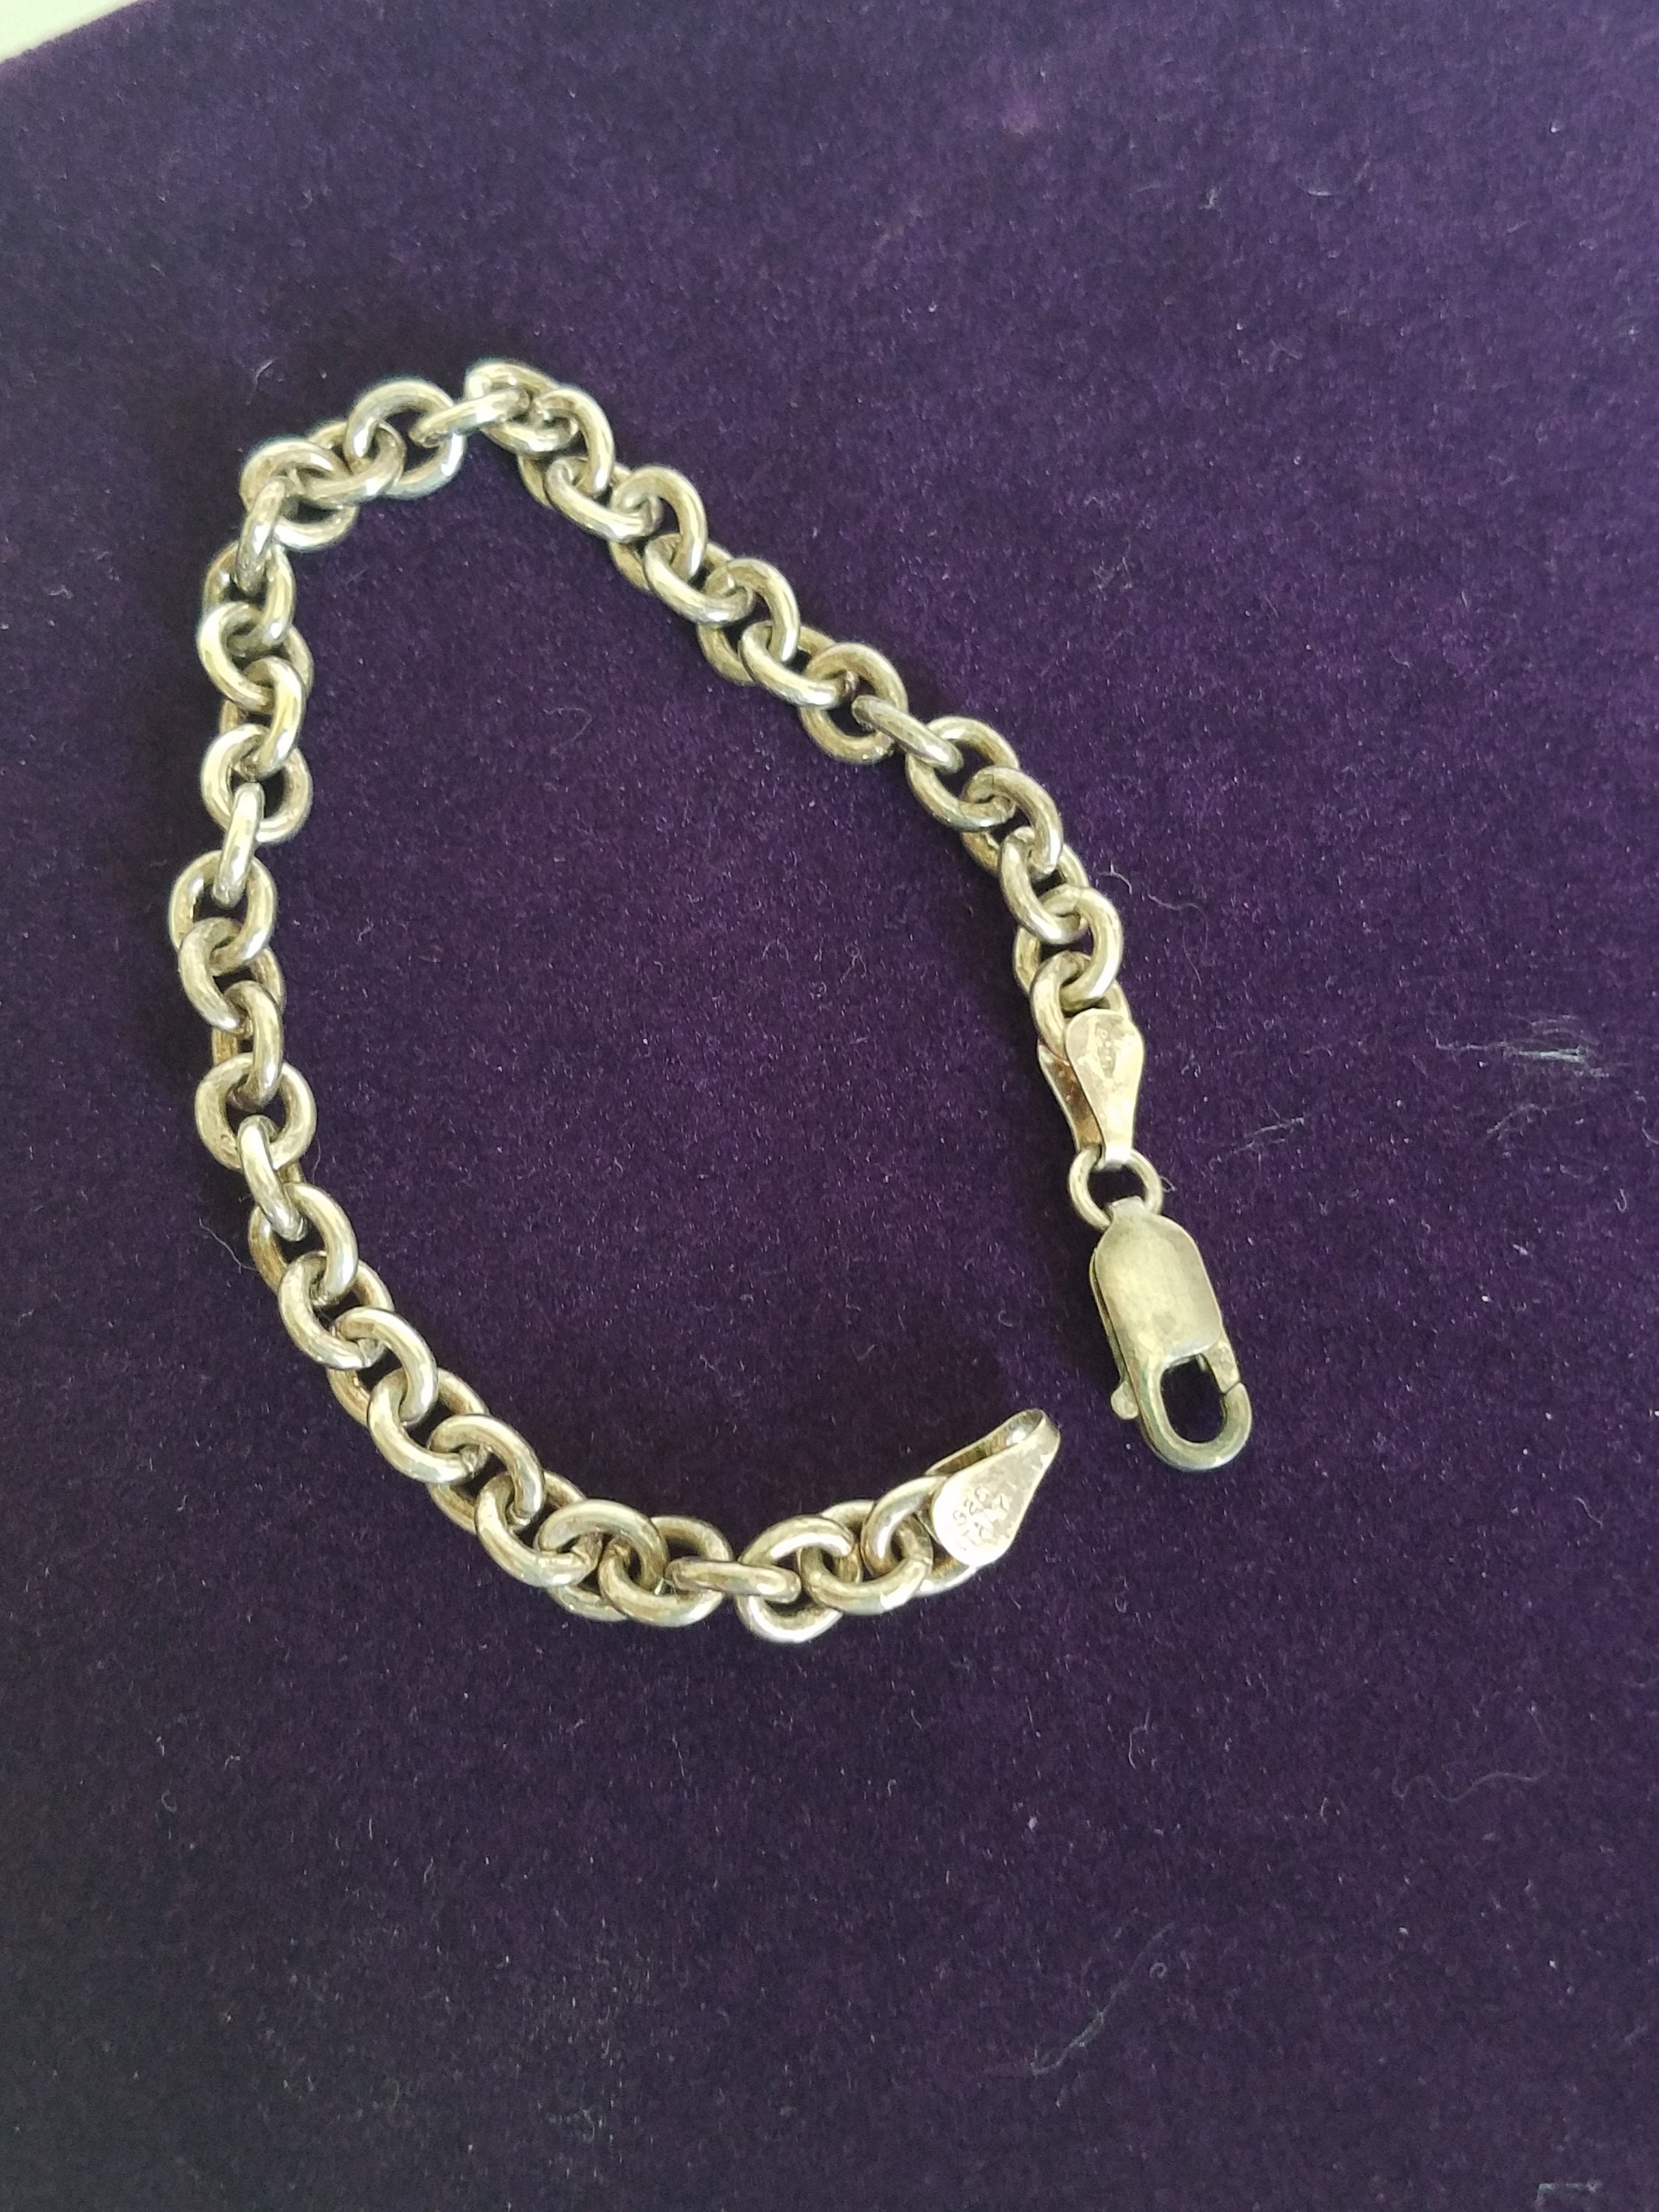 925 Italy Bracelet for Men - Italian Silver Size 7 - 10 in - VY Jewelry